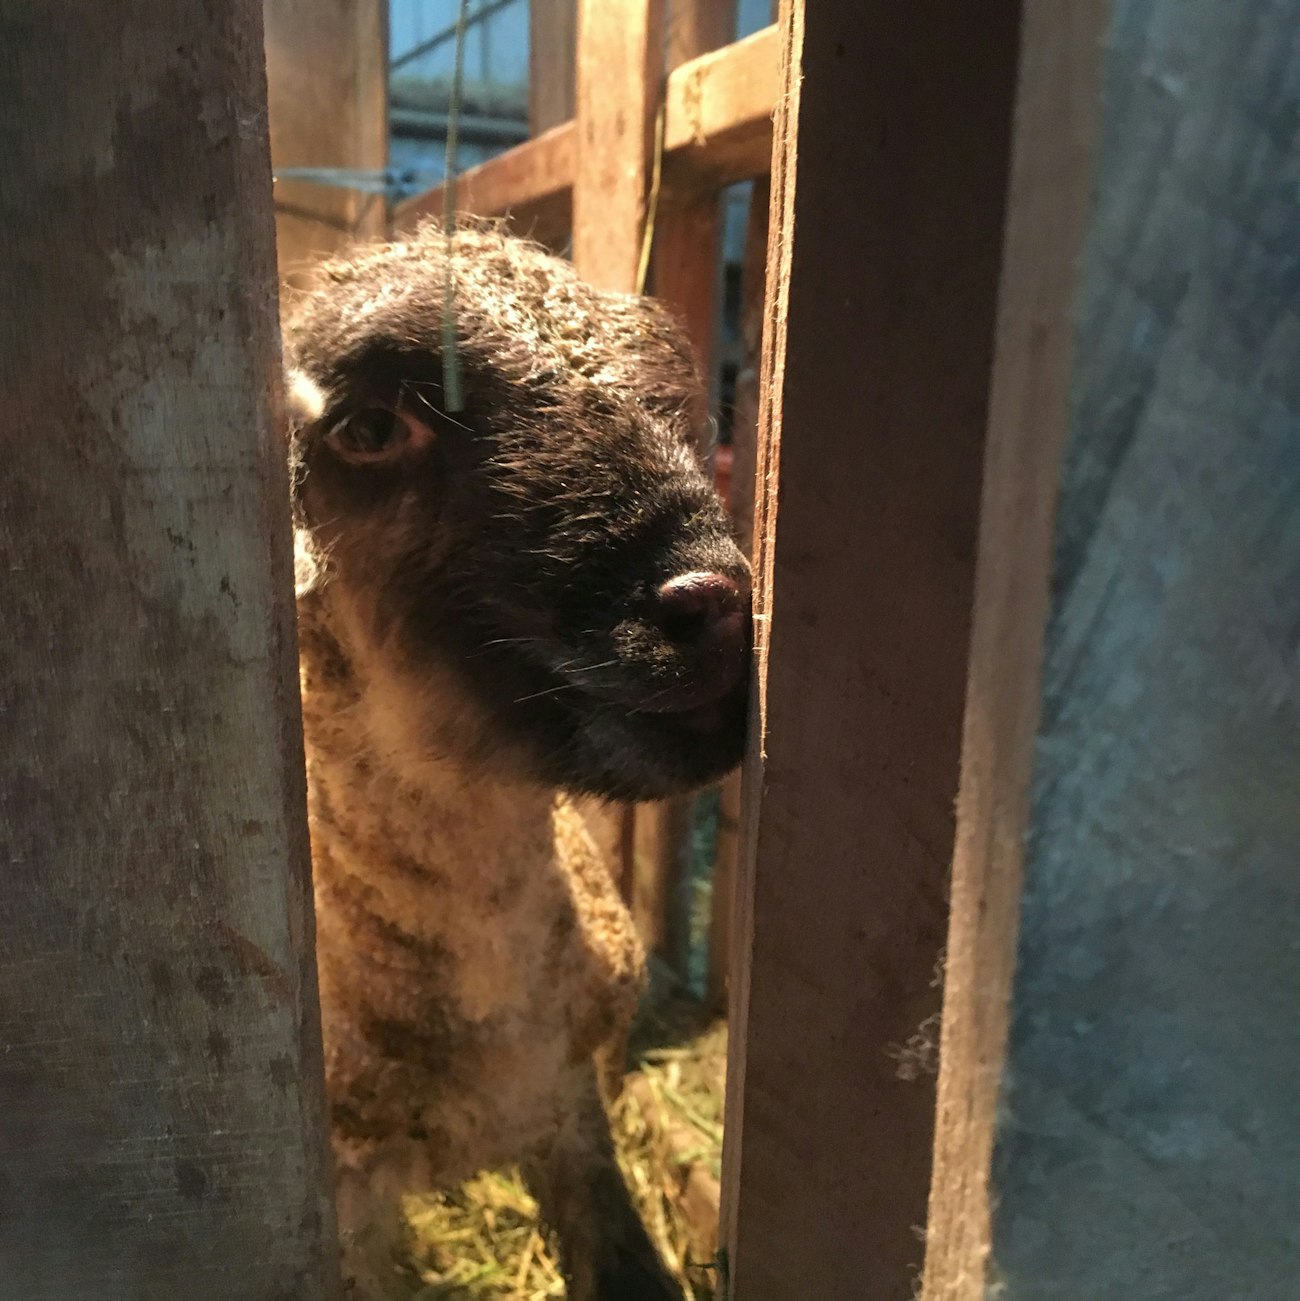 Black faced tiny lamb peering through fence in barn